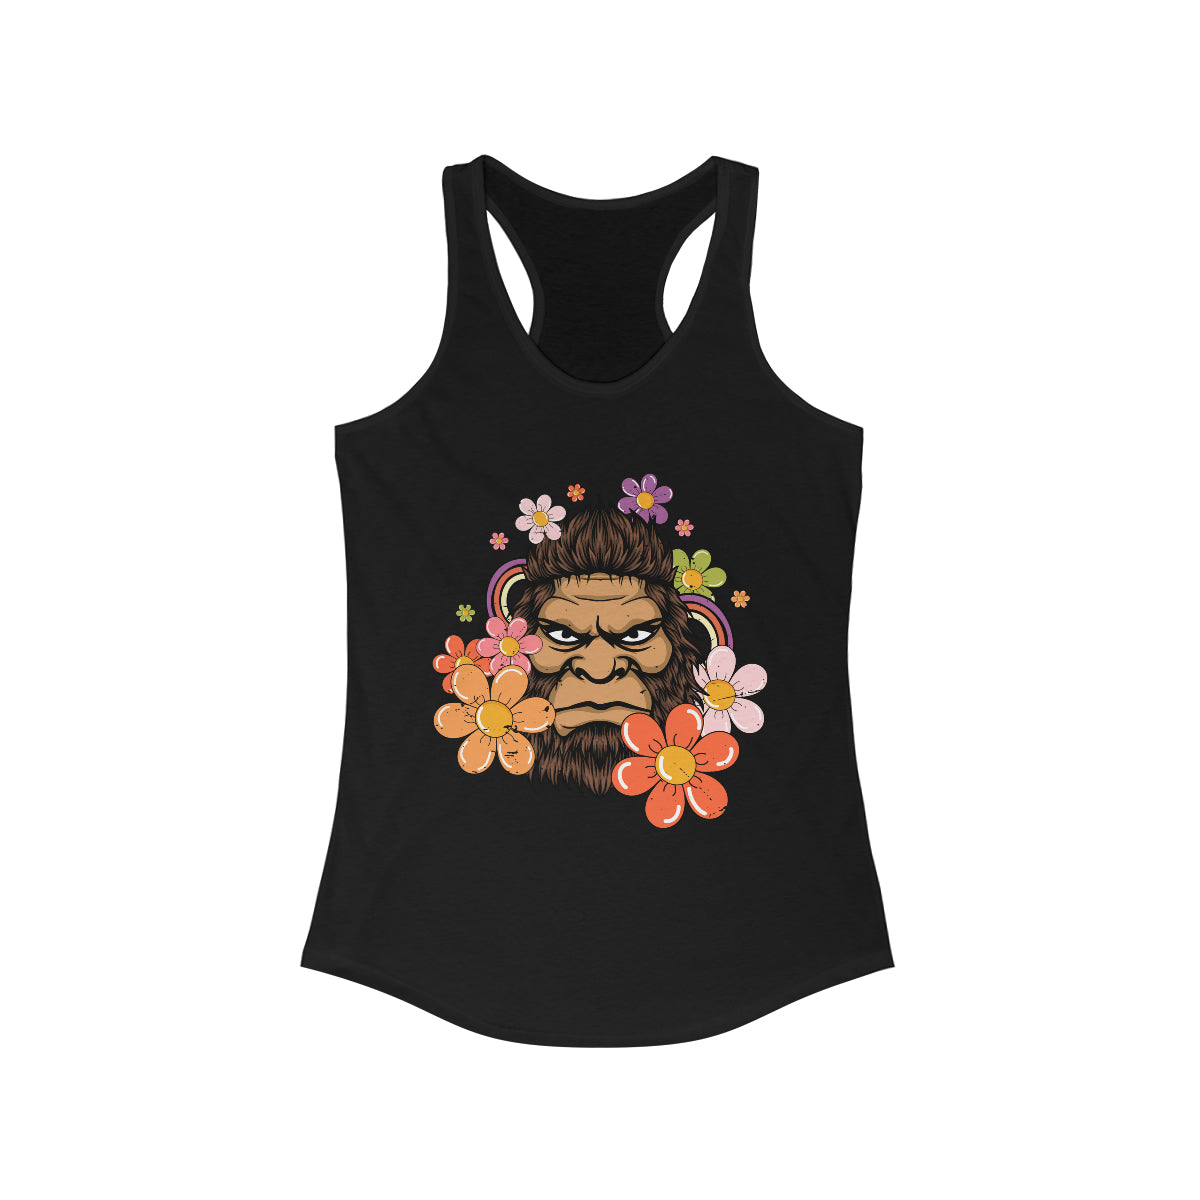 Retro 70s Floral Bigfoot Shirt | Funny Flower Power Shirt | Women's Slim-fit Racerback Tank Top